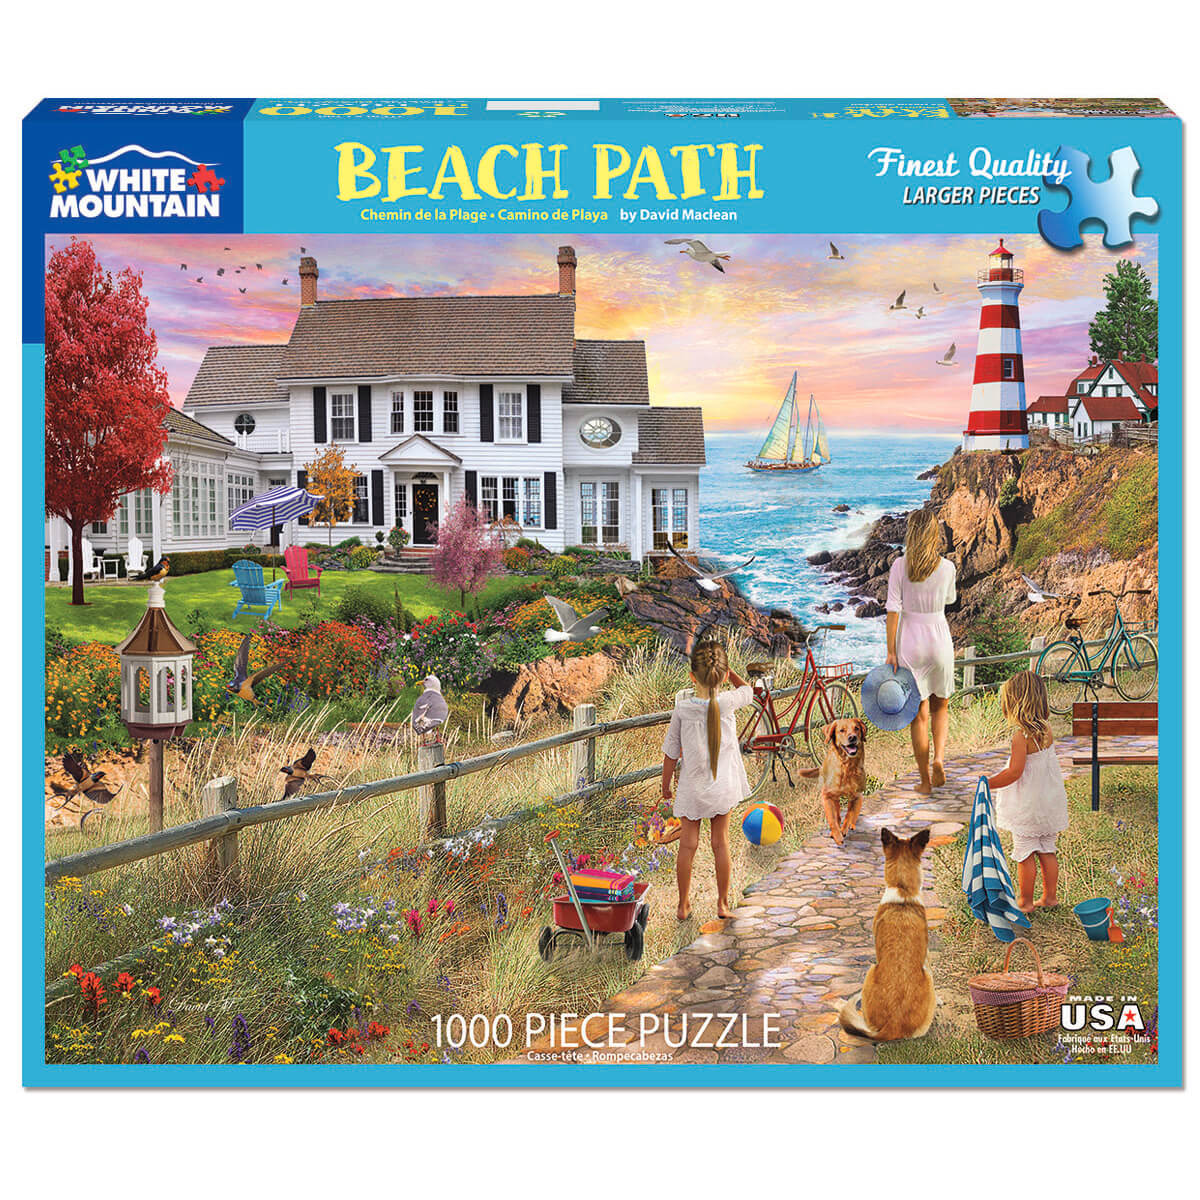 White Mountain Puzzles Beach Path 1000 Piece Jigsaw Puzzle